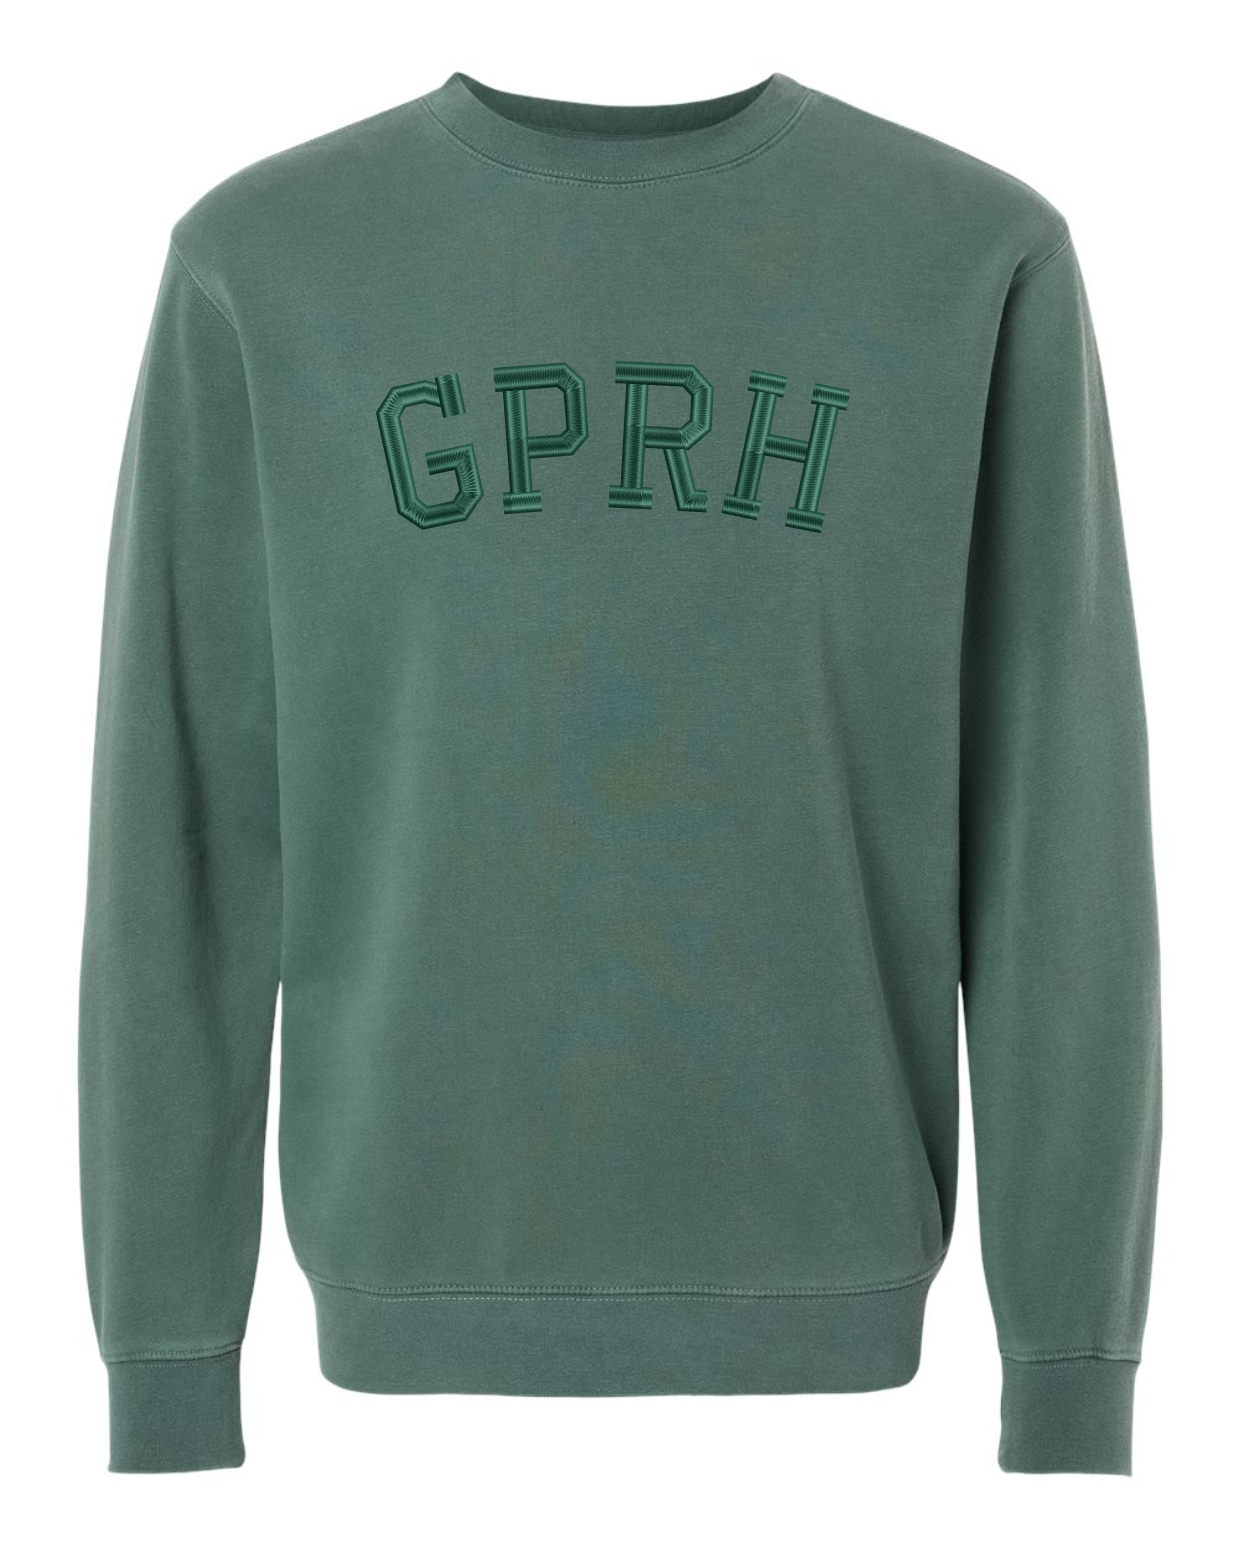 GPRH Embroidered Crewneck | Alpine Green